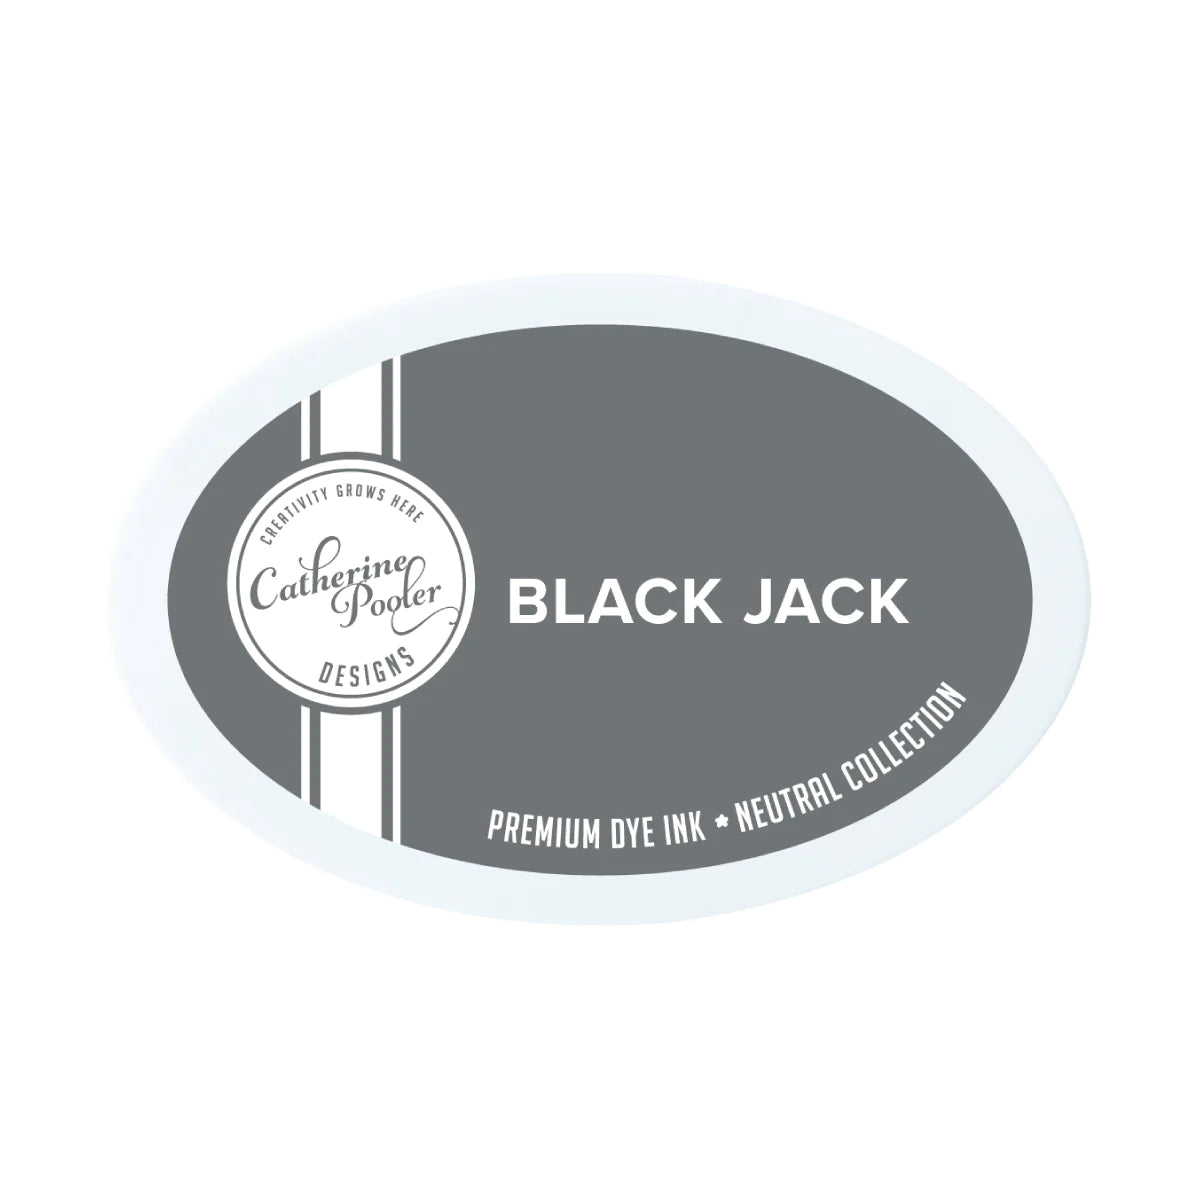 Black Jack Premium Dye Ink Pad - Neutral Collection